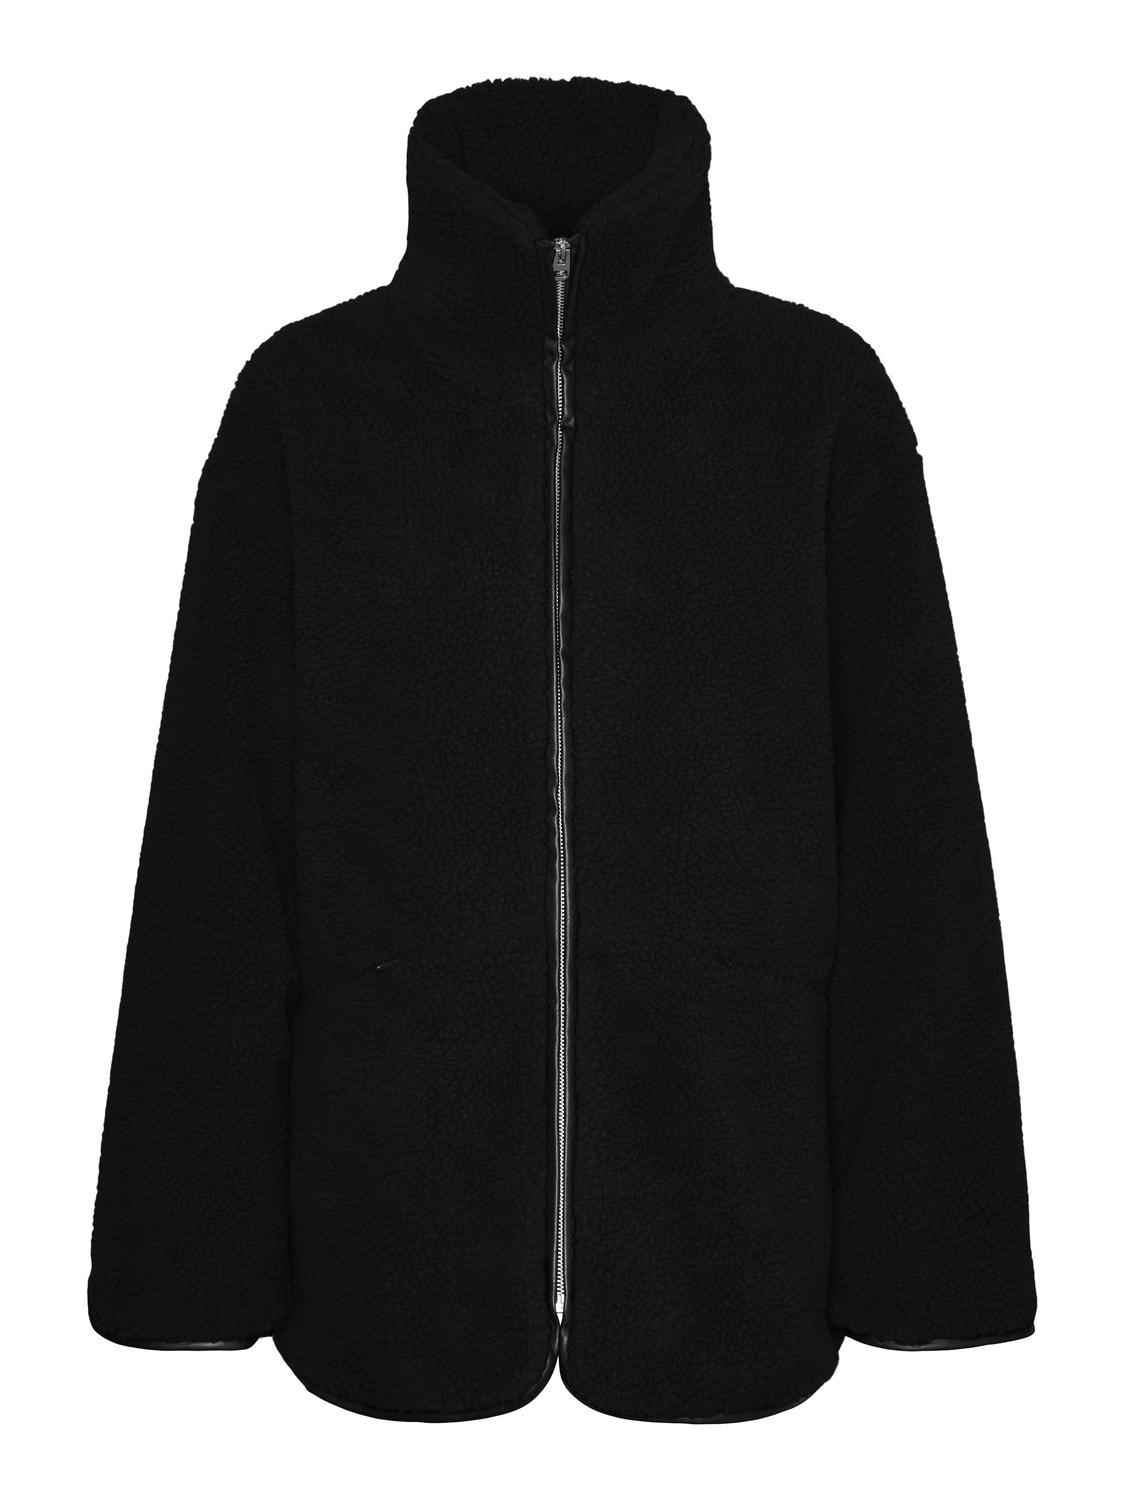 Vero Moda VMLUNE Jacket -Black - 10302341